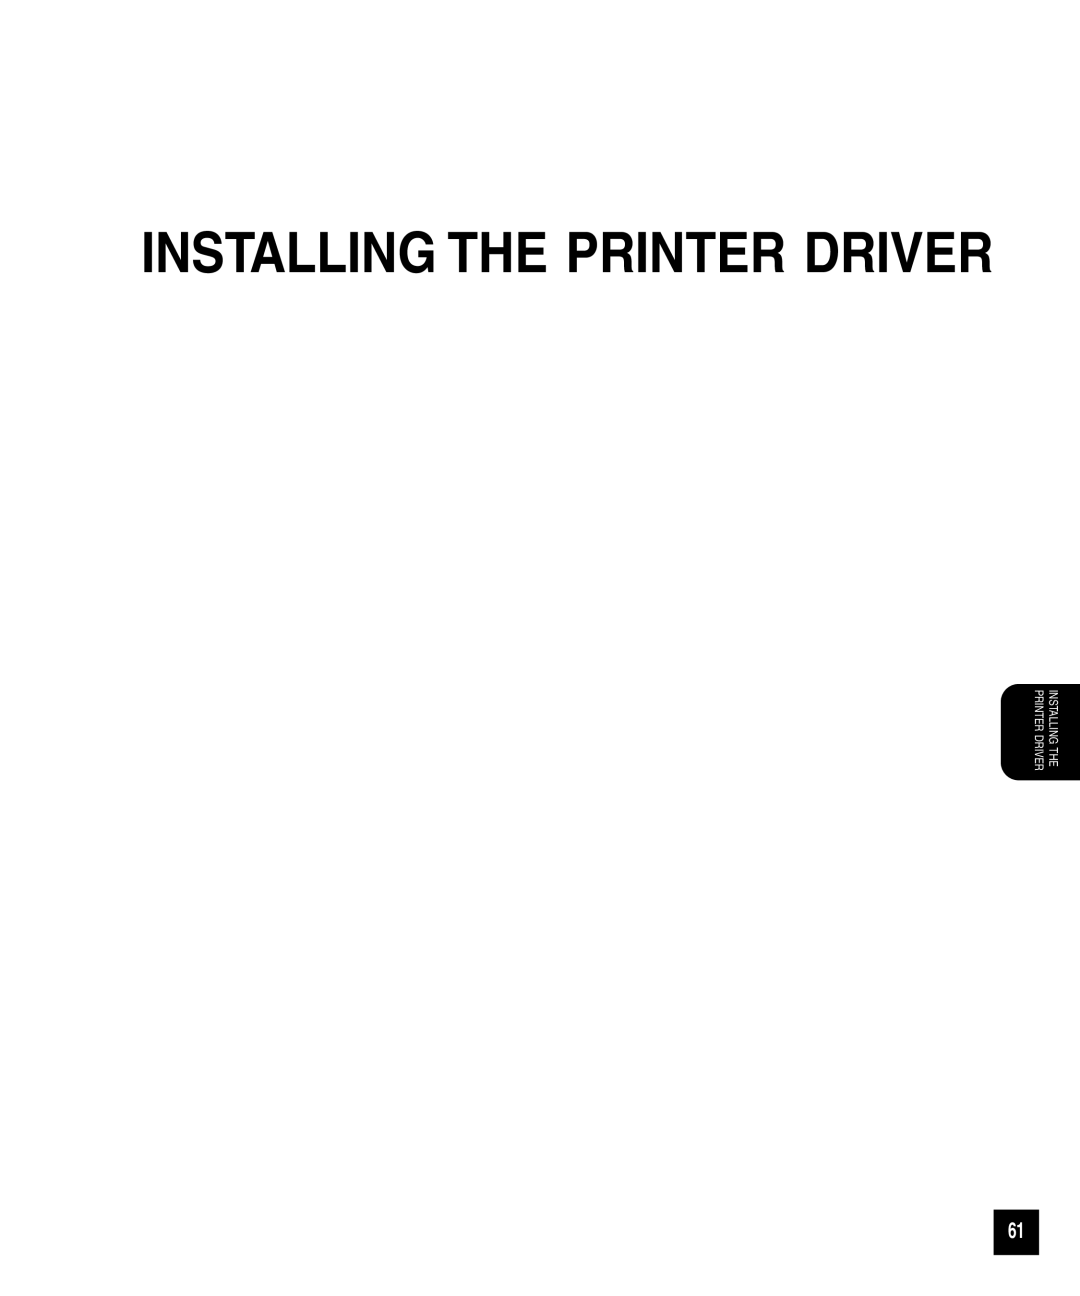 Toshiba GA-1040 manual Installing The Printer Driver 